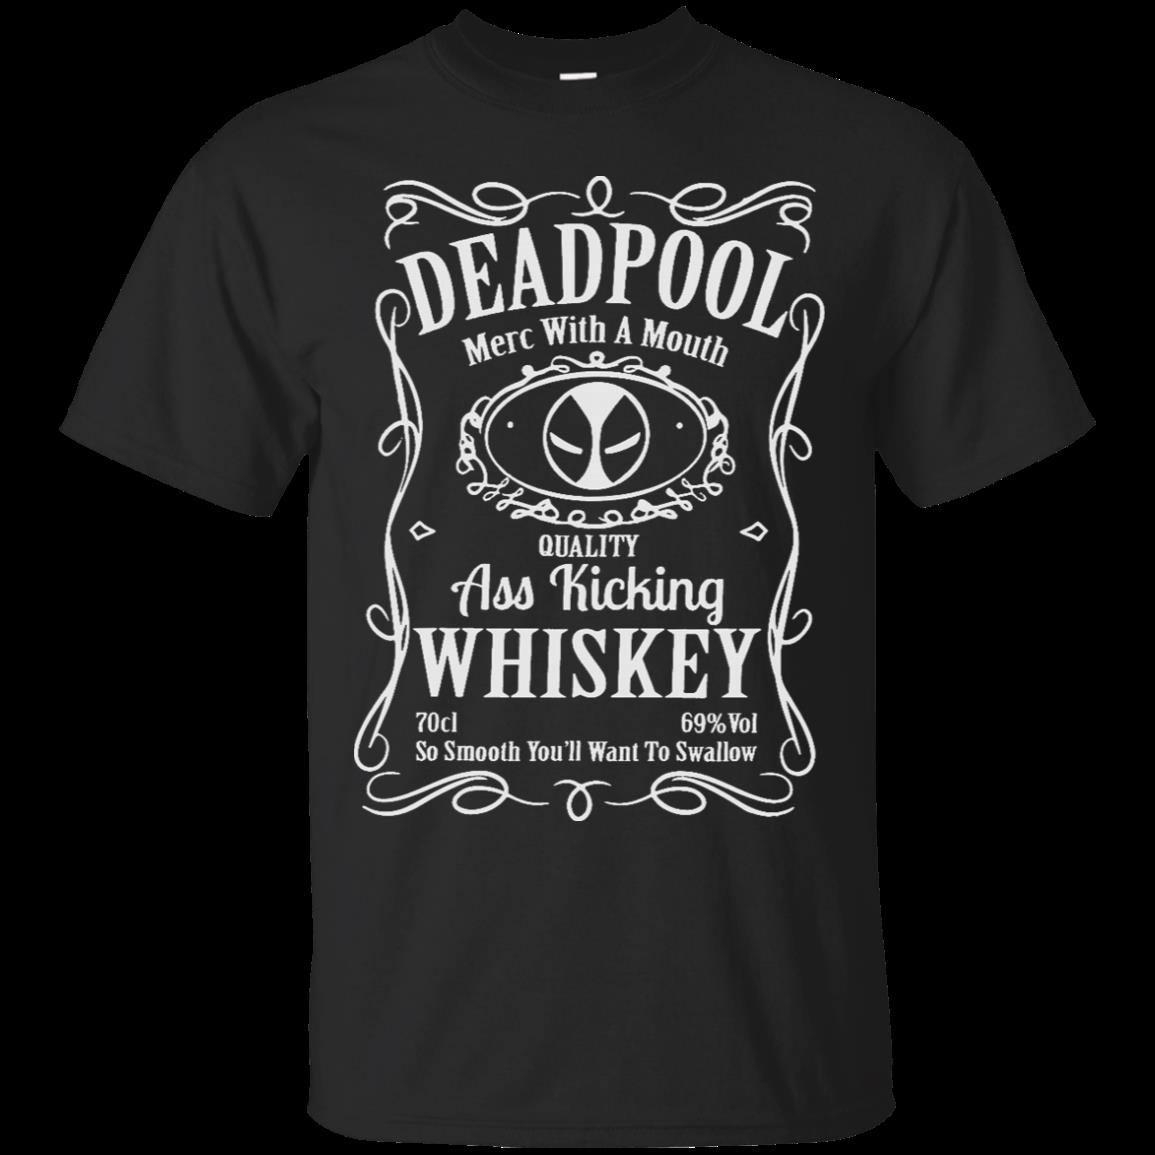 Merc With A Mouth Quality Ass Kicking Whiskey Deadpool T Shirt Hoodies Sweatshirt